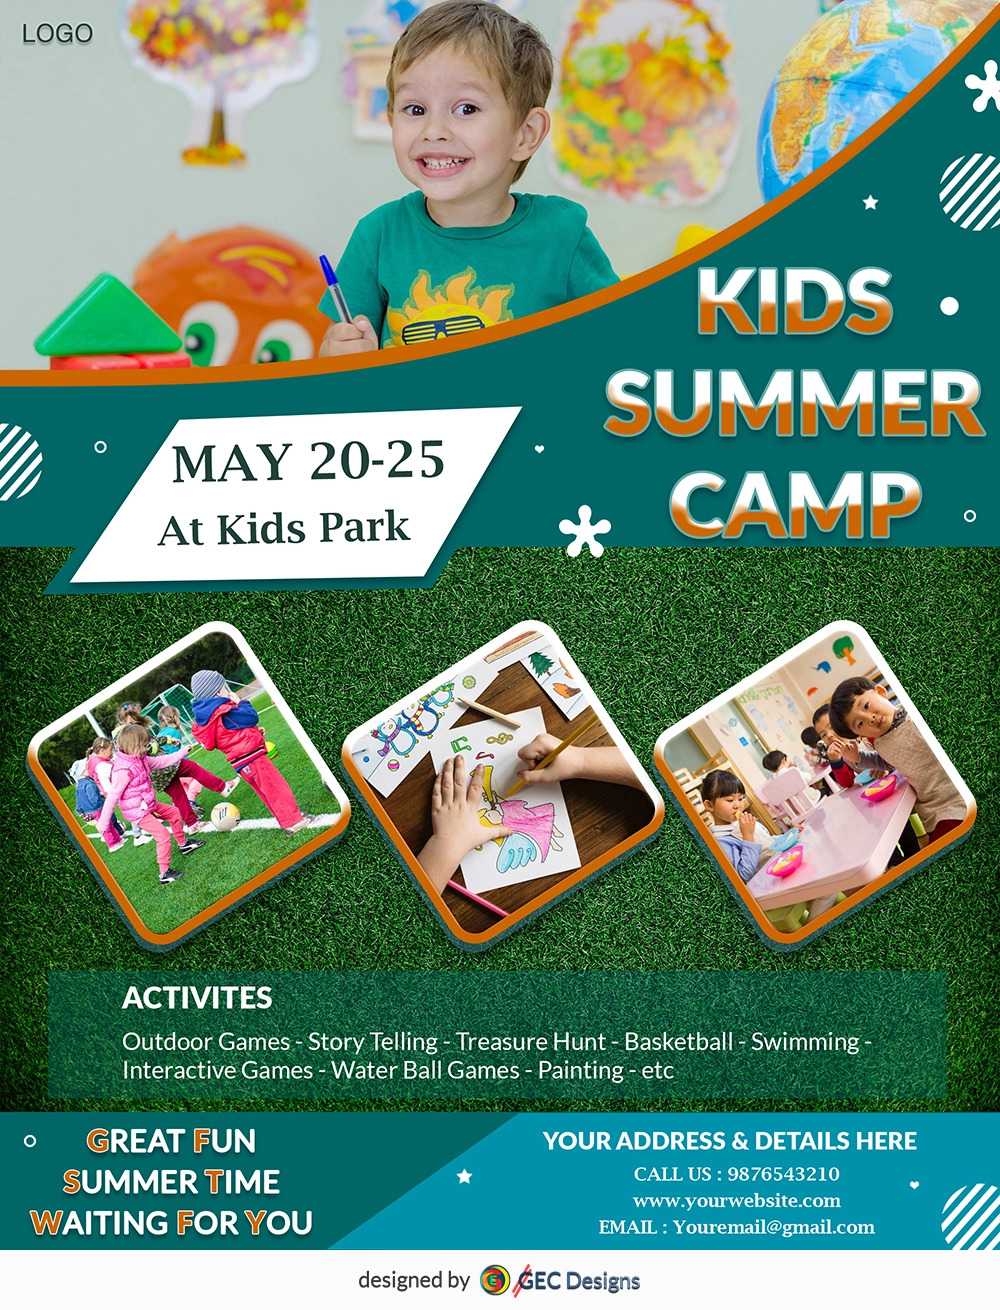 Download Free Great Fun Kids Summer Camp Flyer Design Templates With Free Summer Camp Flyer Template